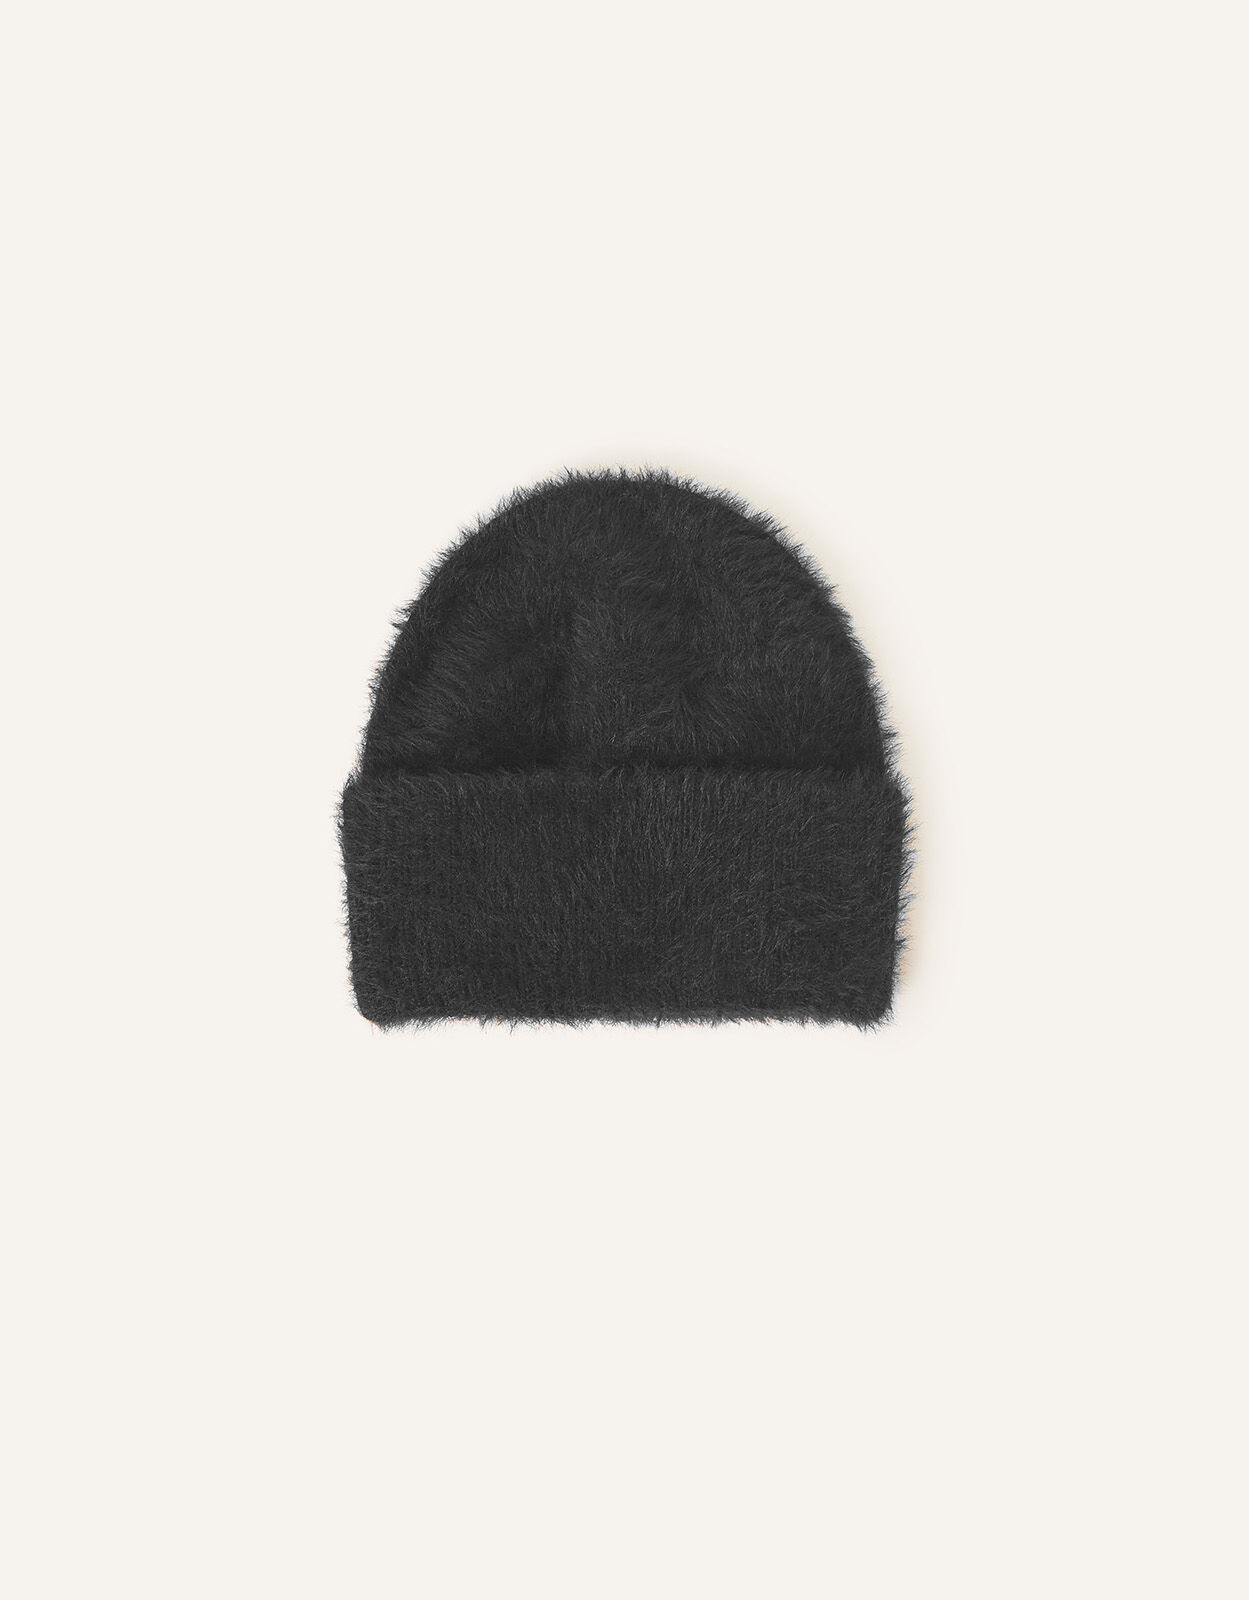 Women's Beanie Hats & Winter Hats | Knit, Chunky Hats | Accessorize UK